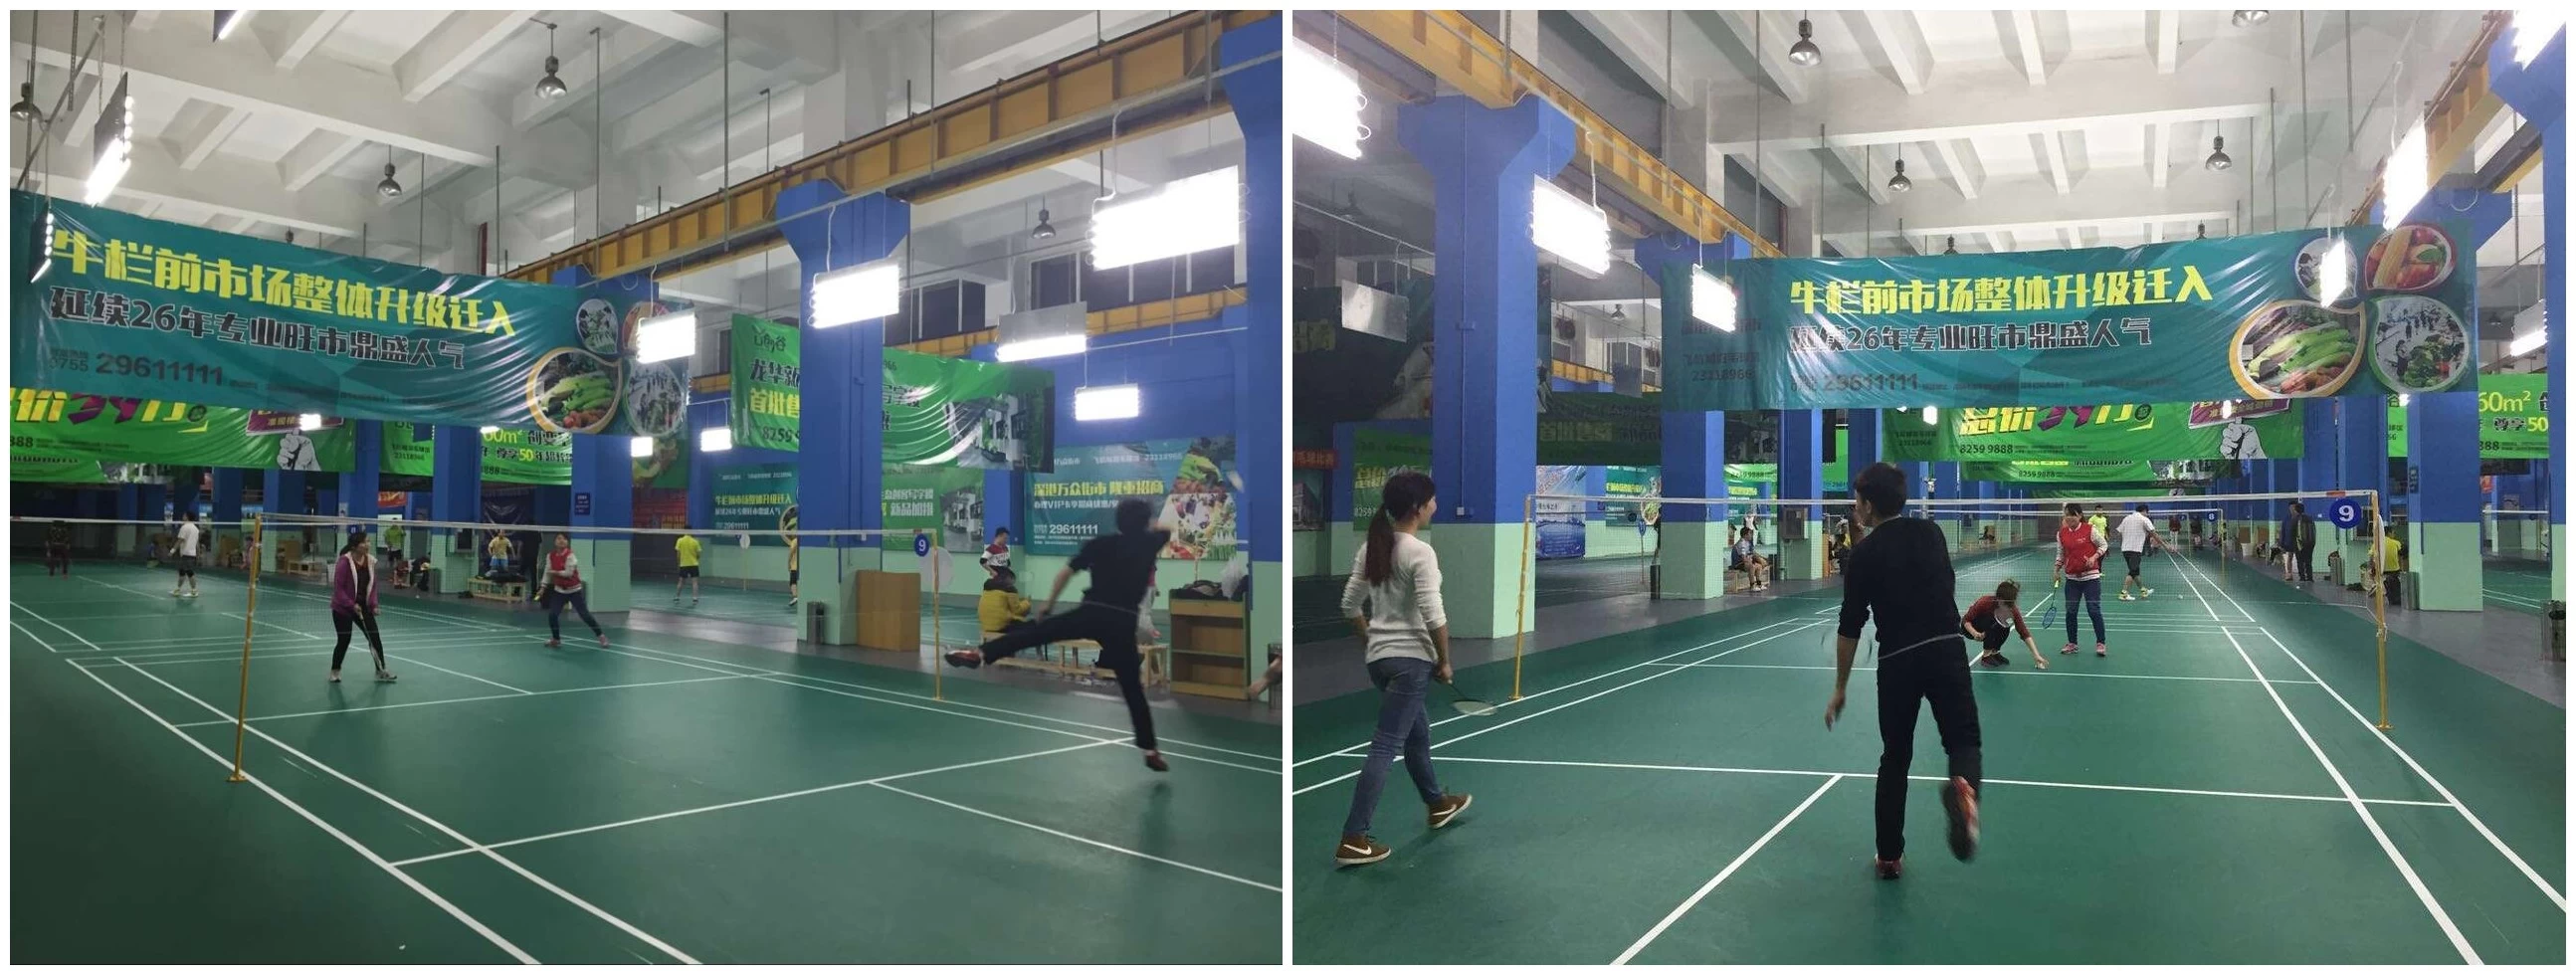 MVTEAM play badminton on ervery Friday